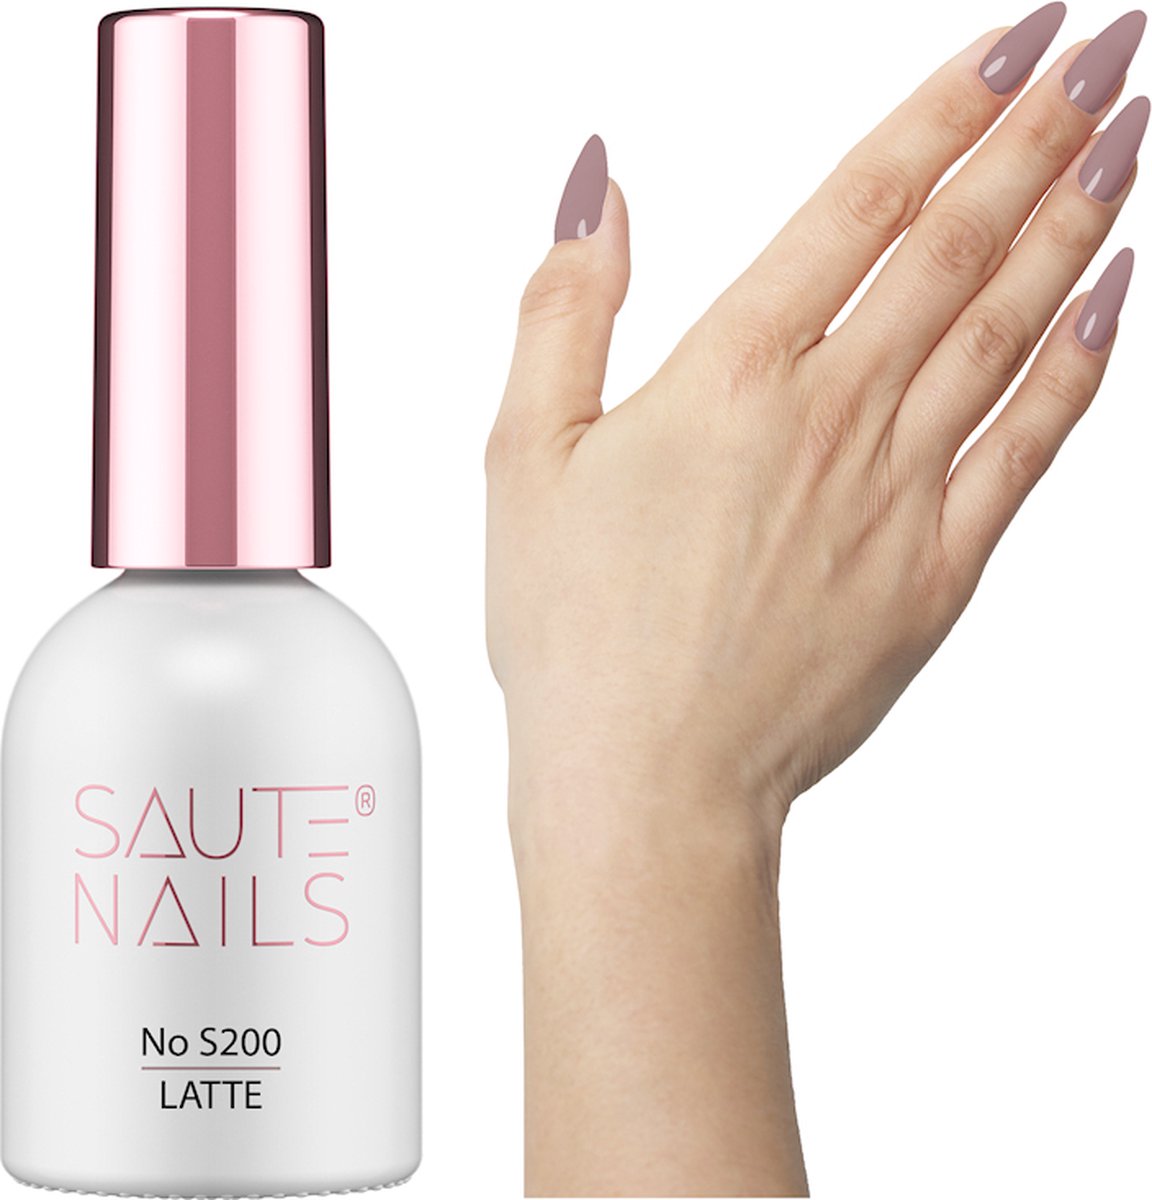 SAUTE Nails Nude UV/LED Gellak 8ml. - S200 Latte